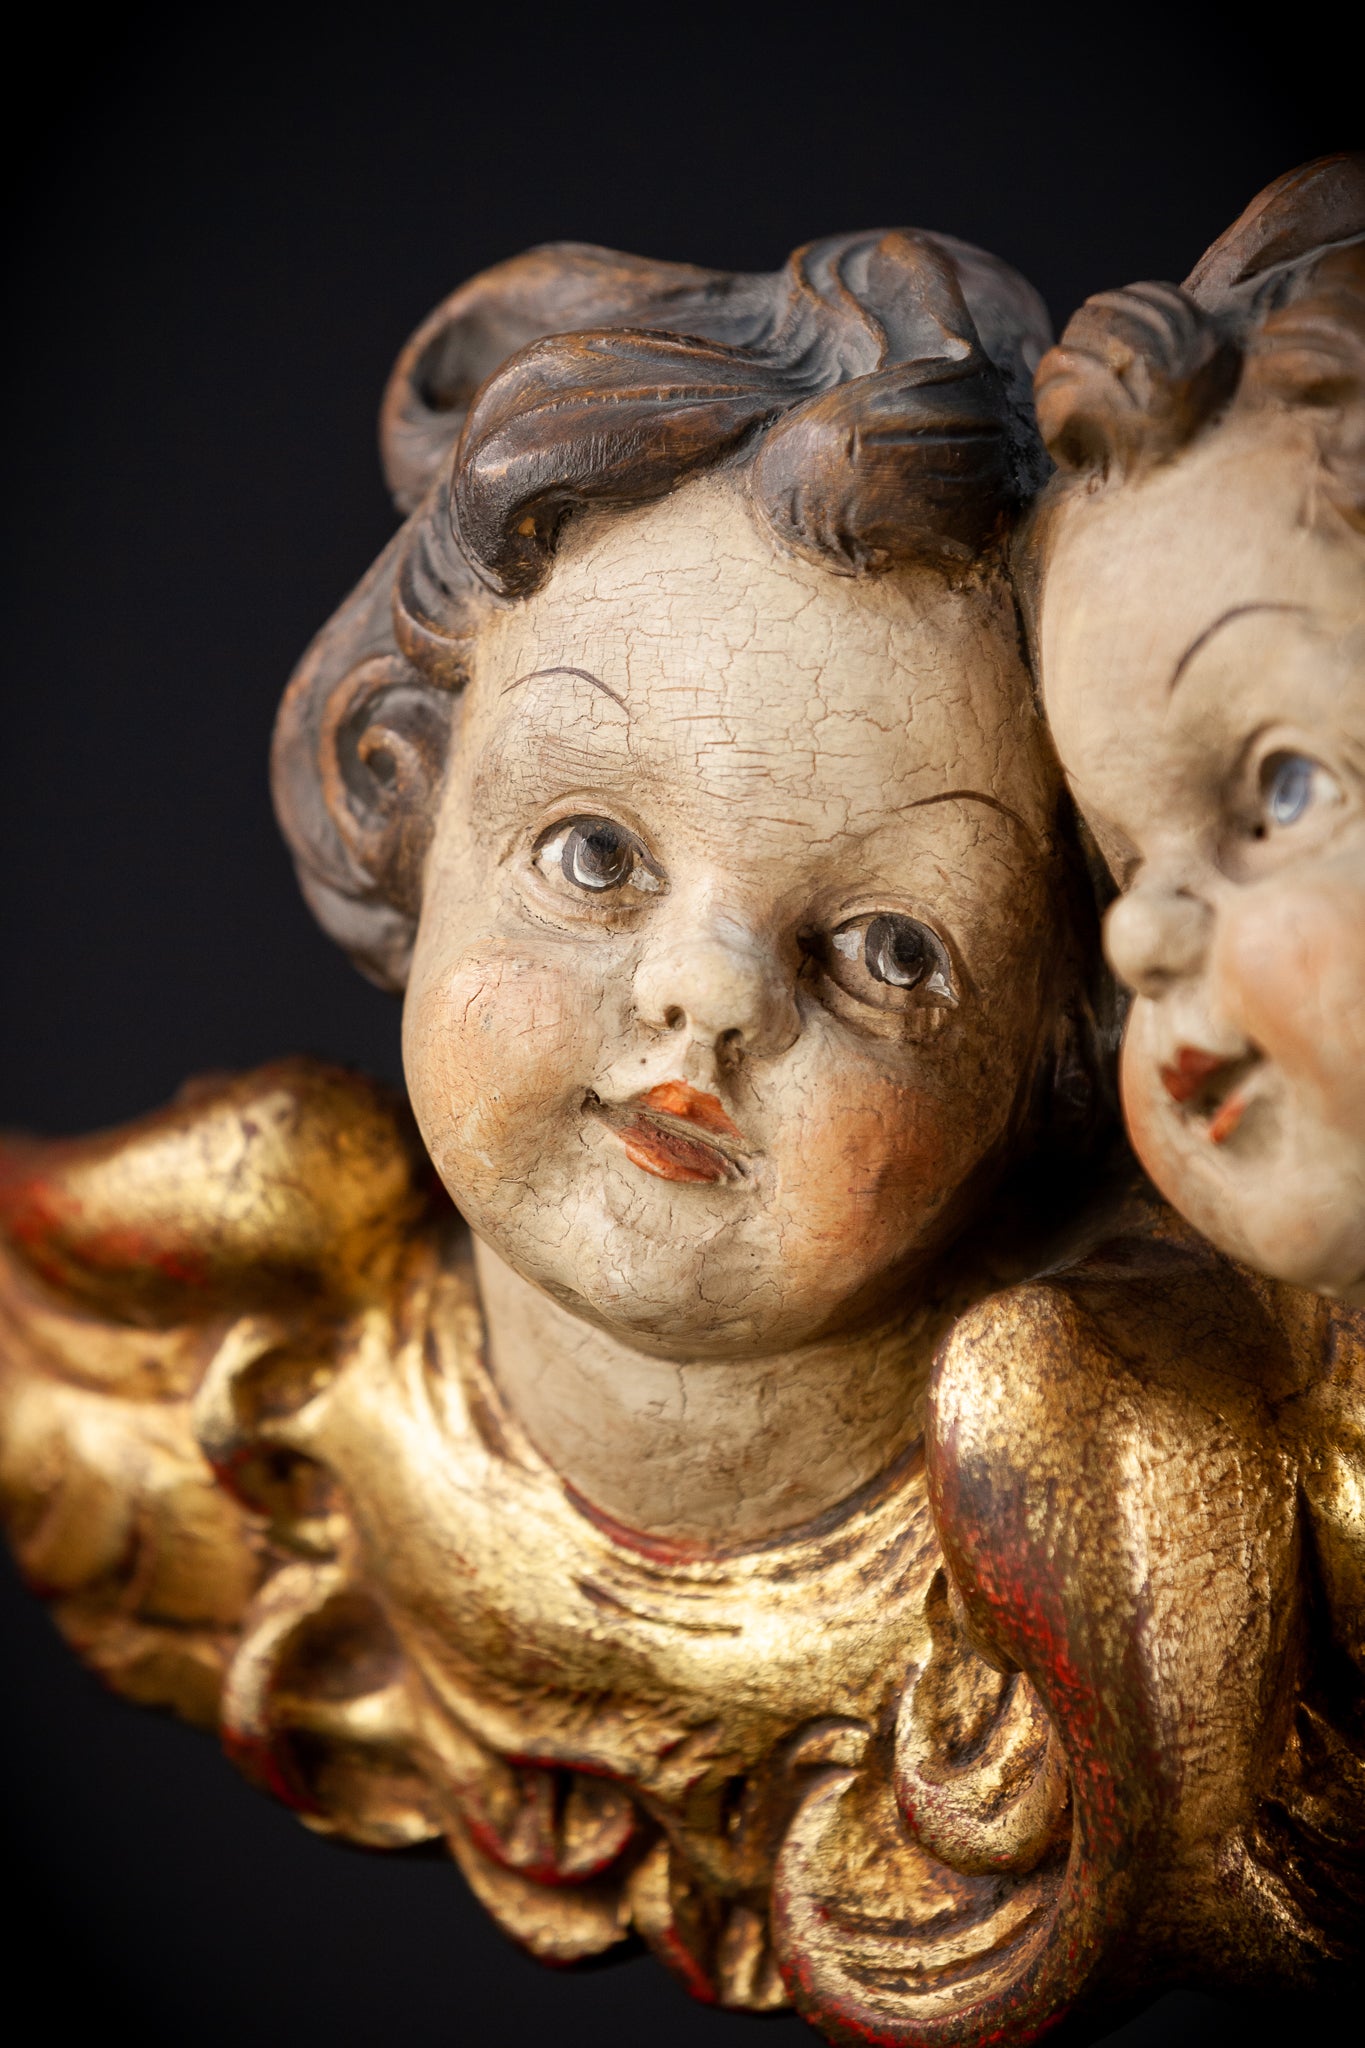 Pair of Angels Wooden Sculpture | Vintage 13.8 " / 35 cm